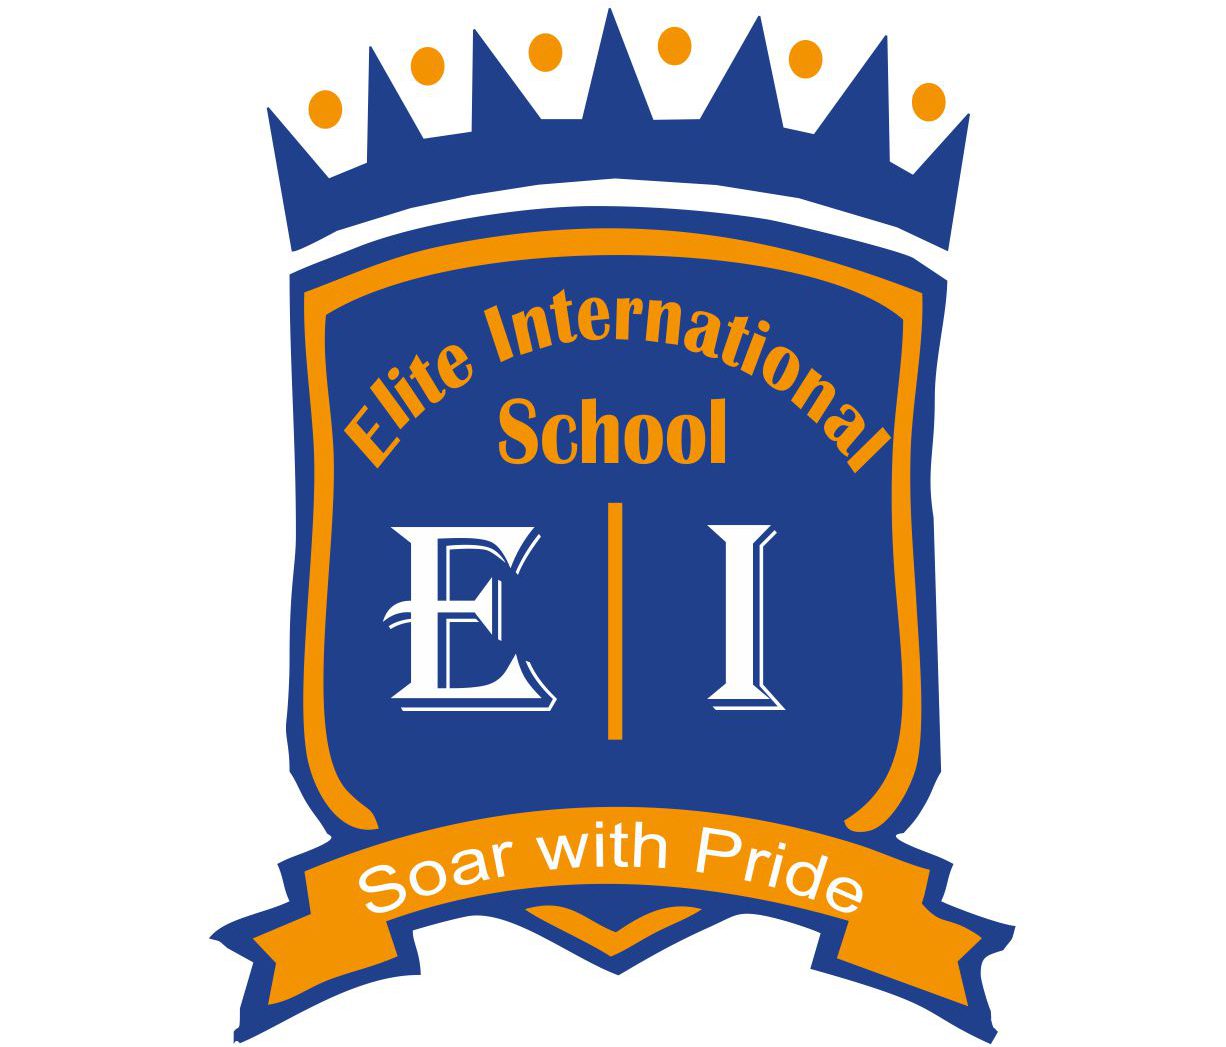 Elite International School|Schools|Education